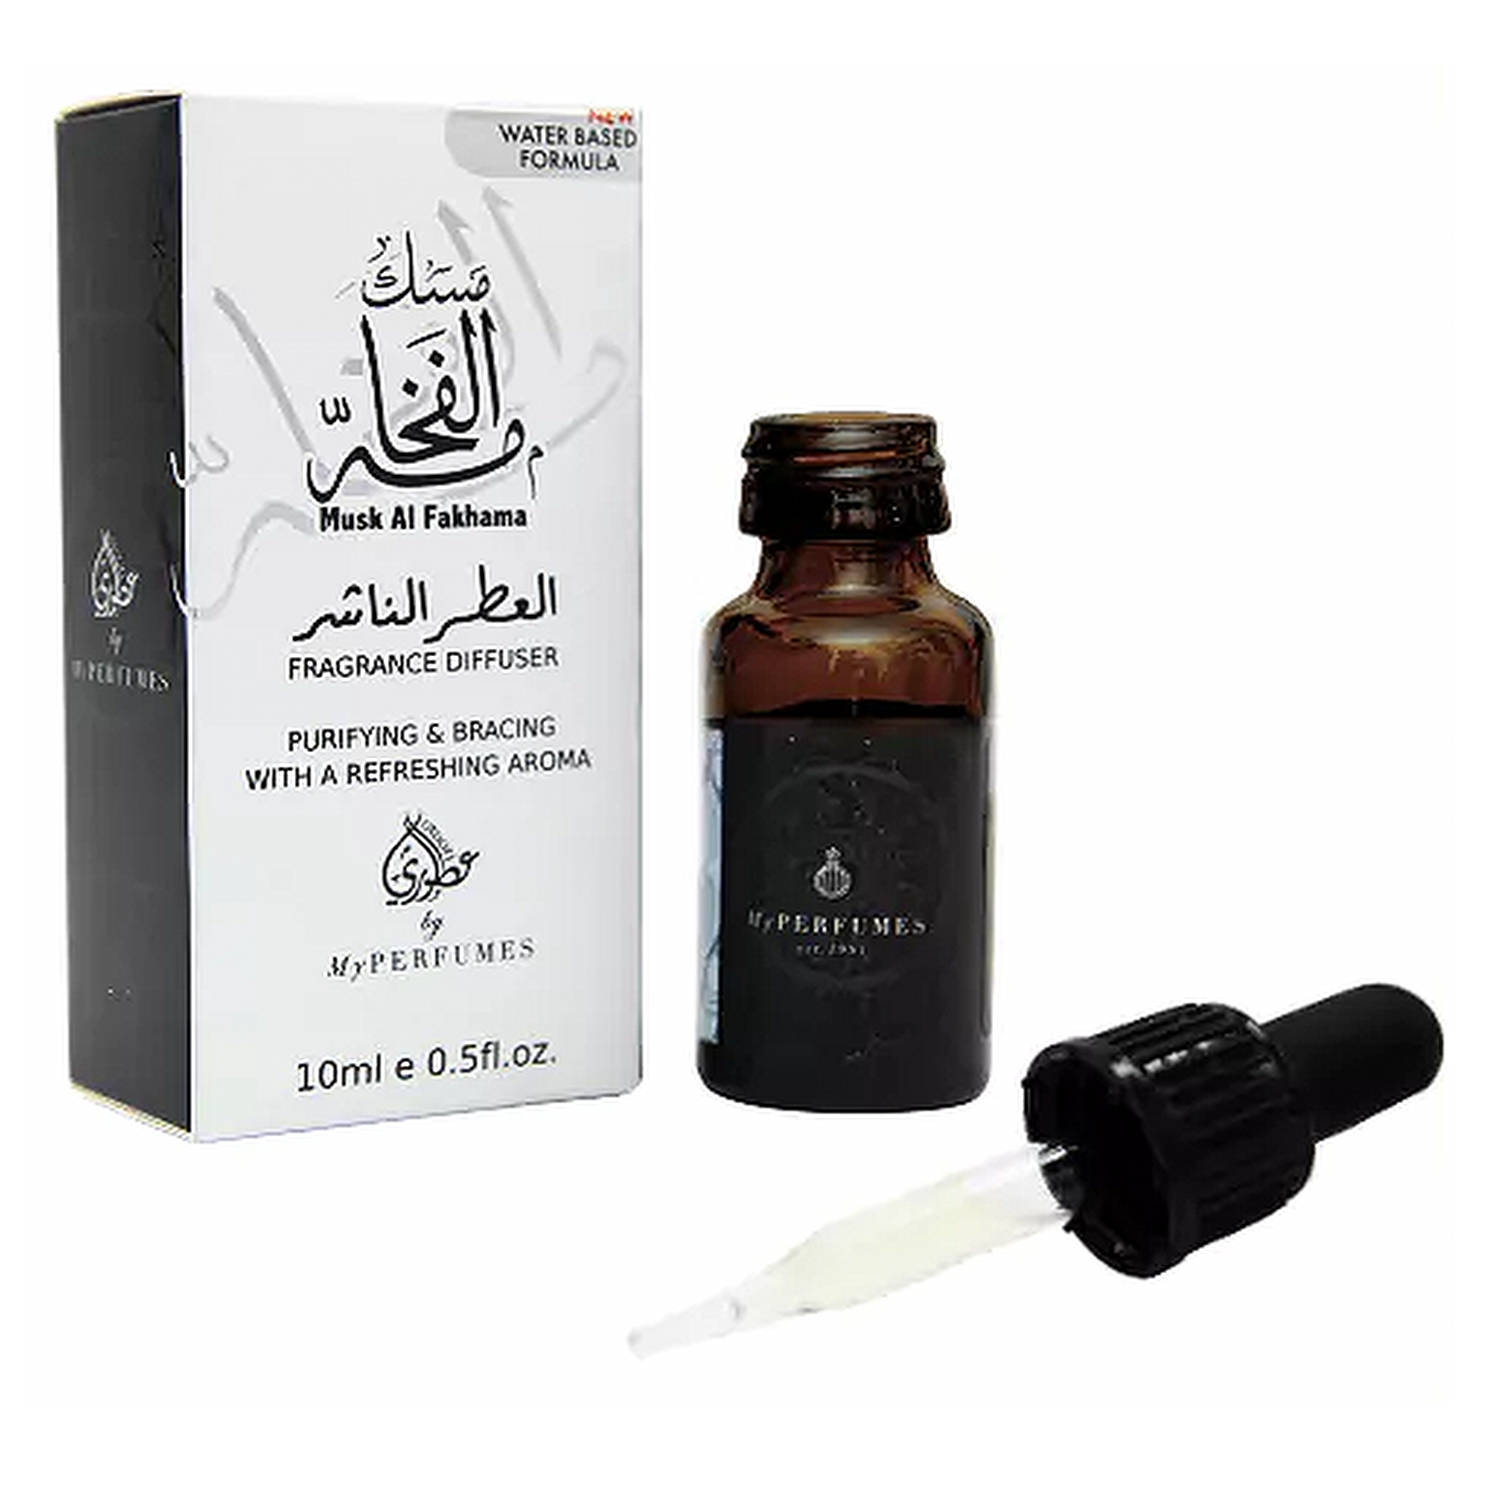 Musk AL Fakhama - Geurolie - Parfumolie voor aroma diffuser, Luchtbevochtiger of aromabrander - Olie Diffuser - 10 ml